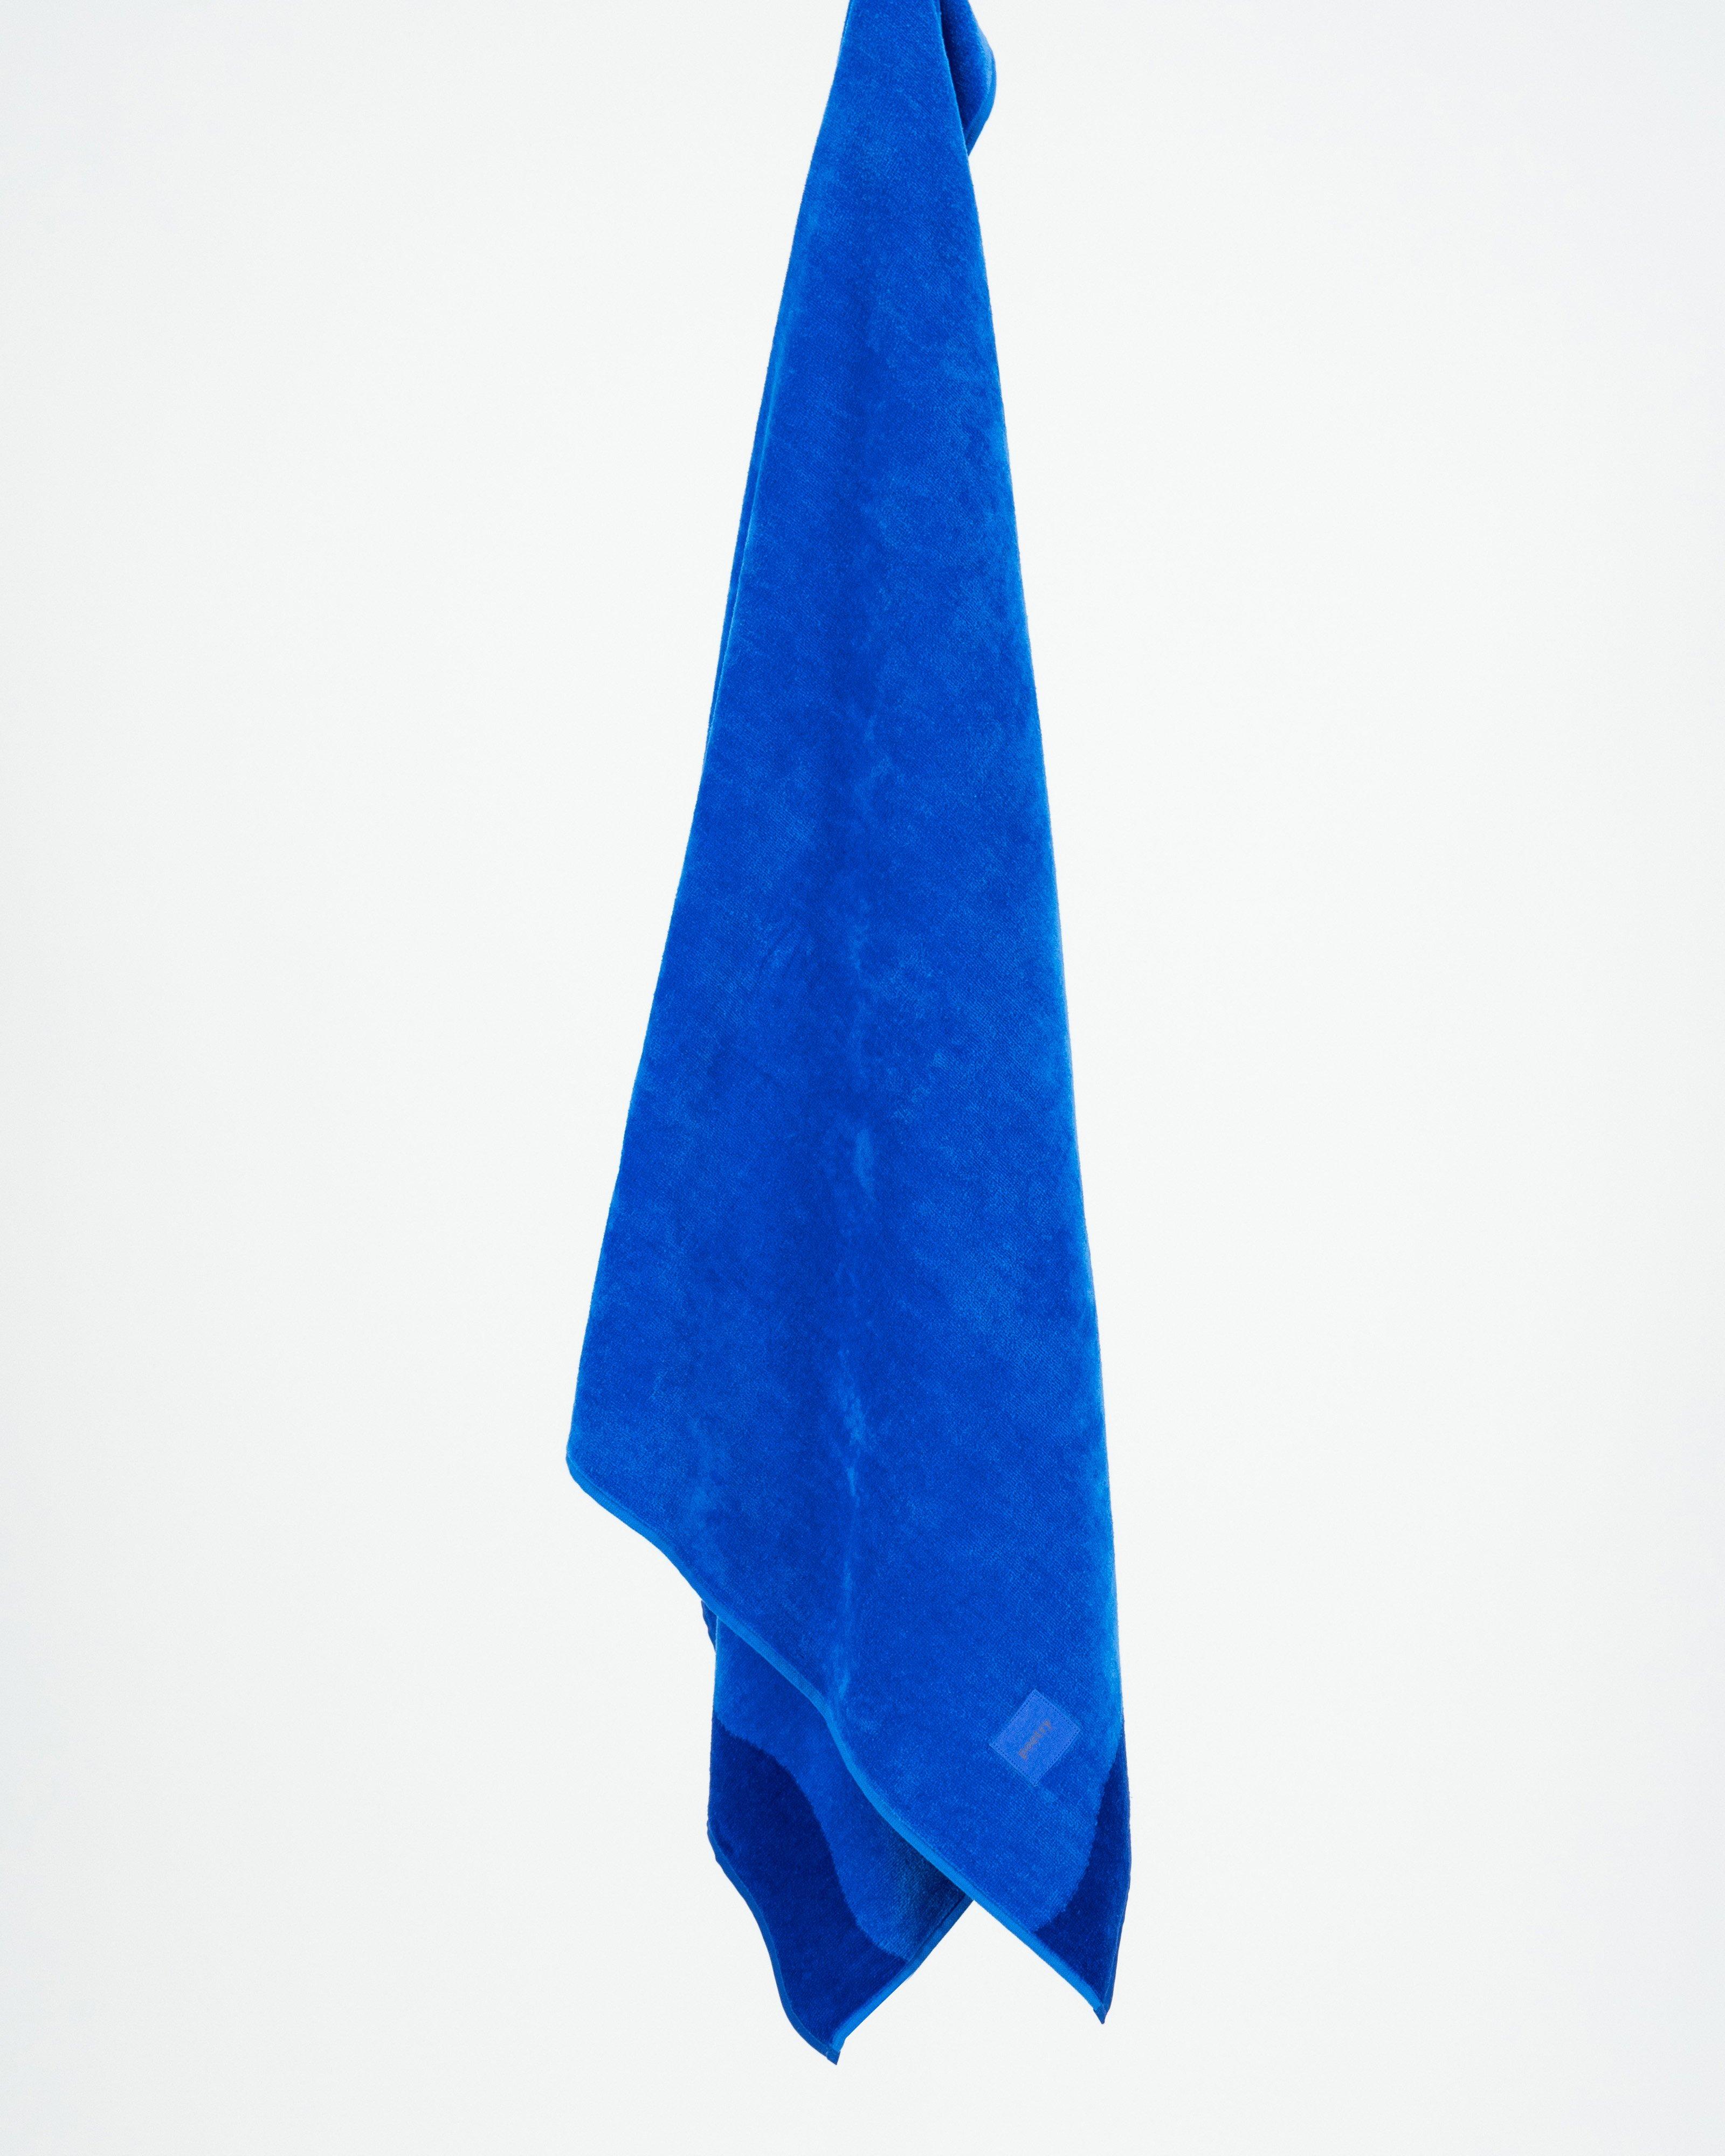 Cleo Scalloped Beach Towel -  Blue